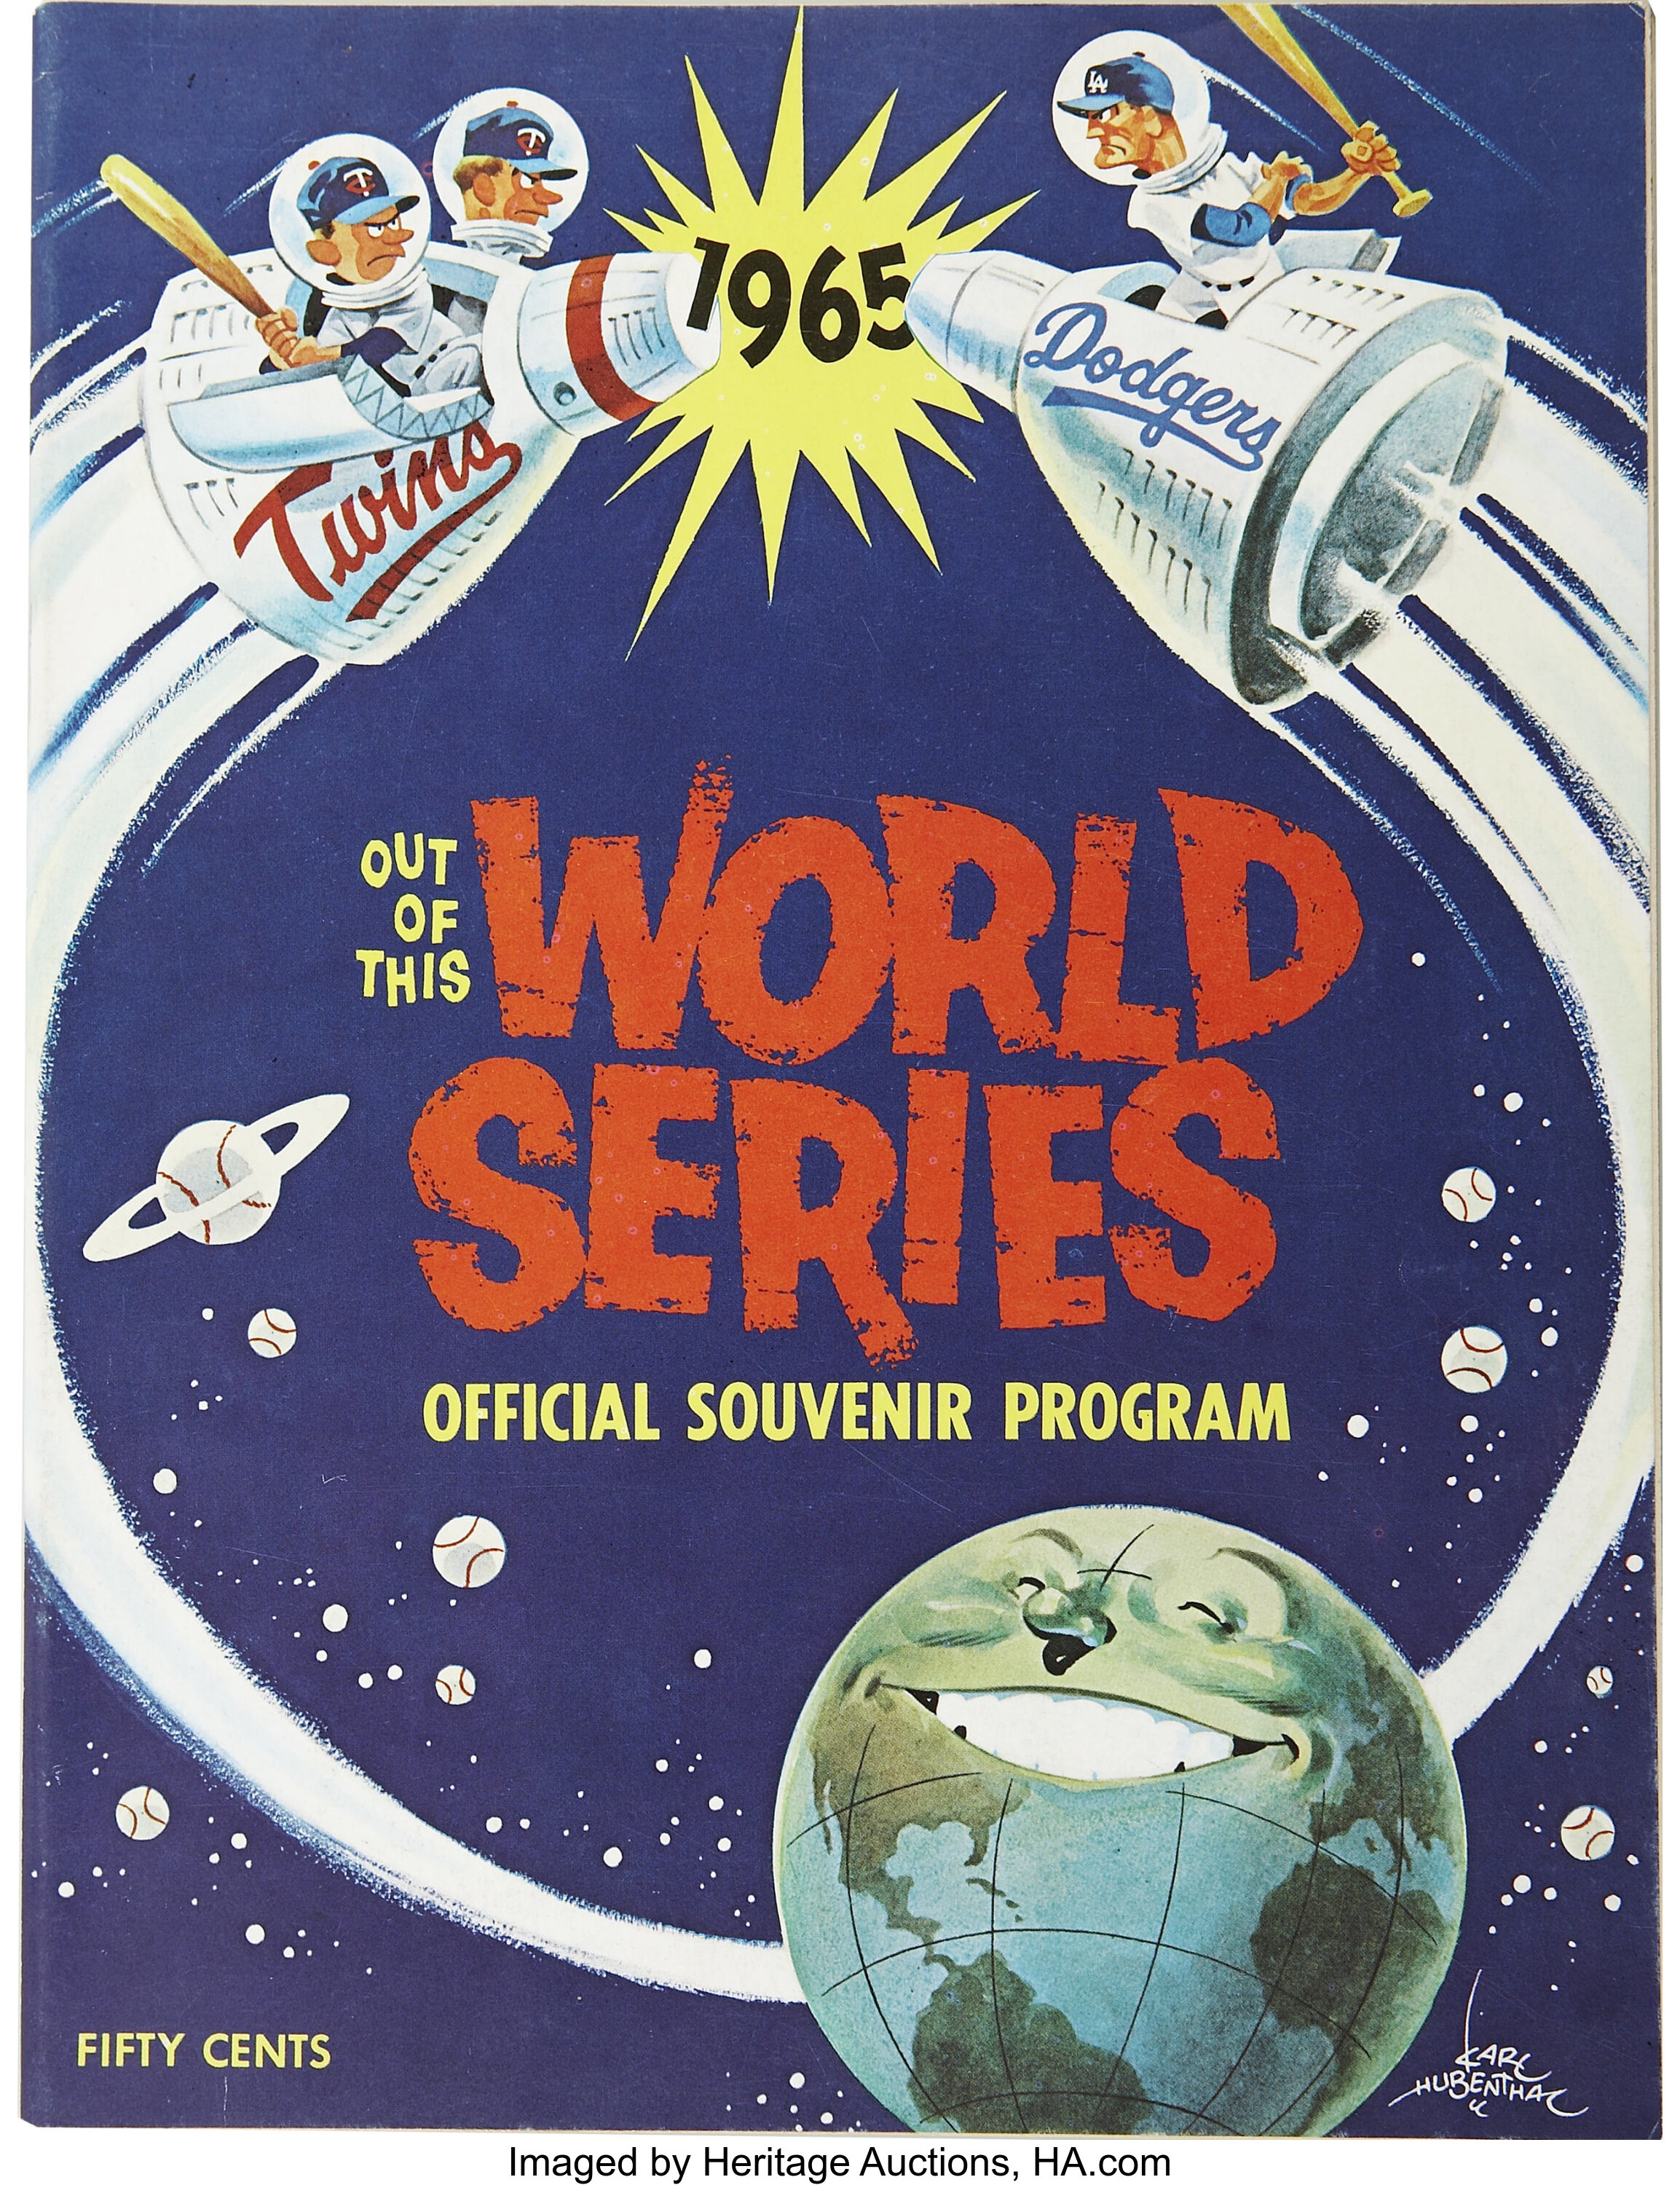 1965 LOS ANGELES DODGERS Print Vintage Baseball Poster 